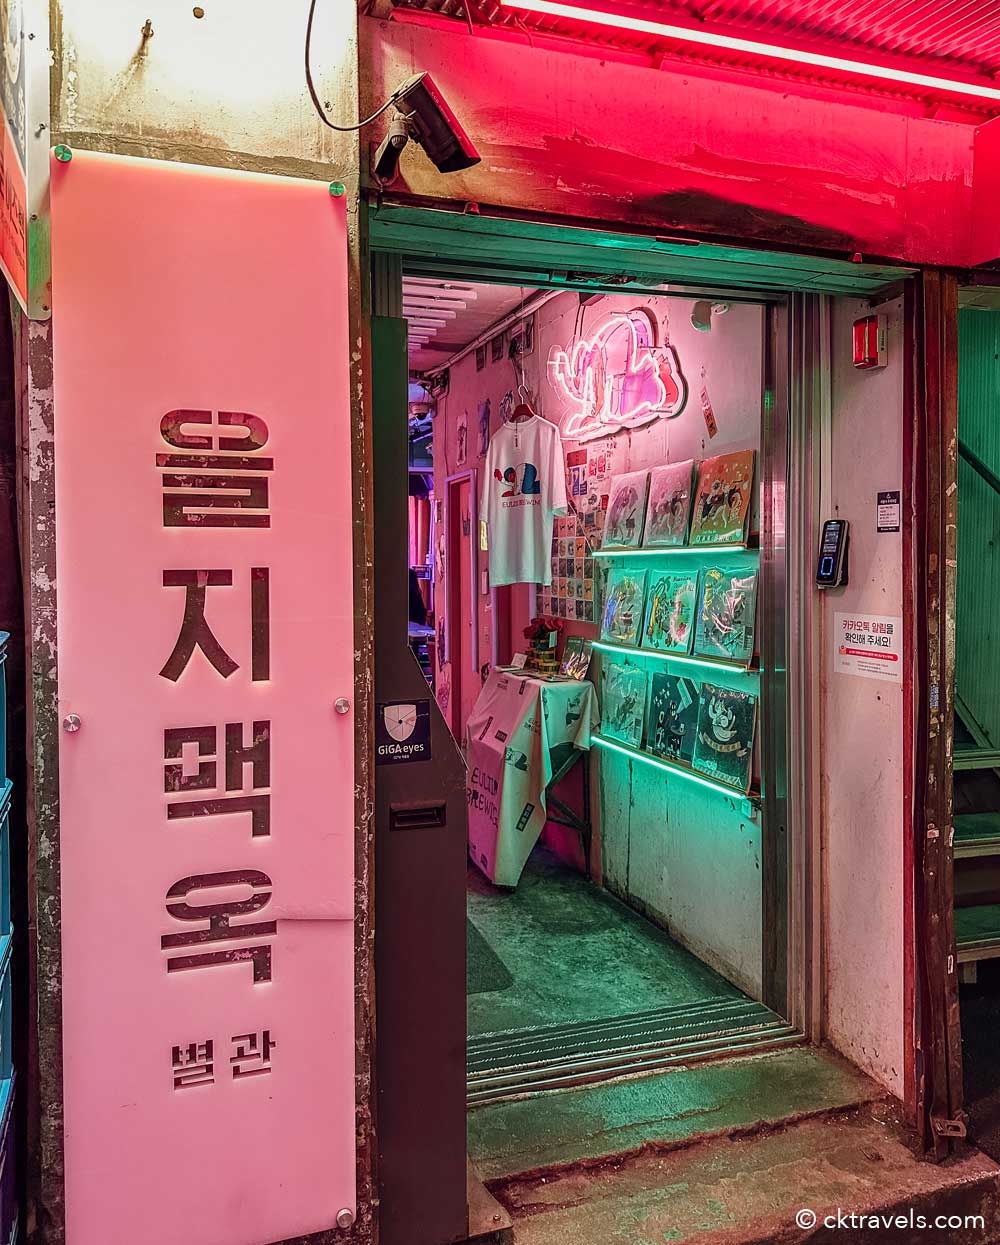 Seoul Craft Beer Bars and Breweries